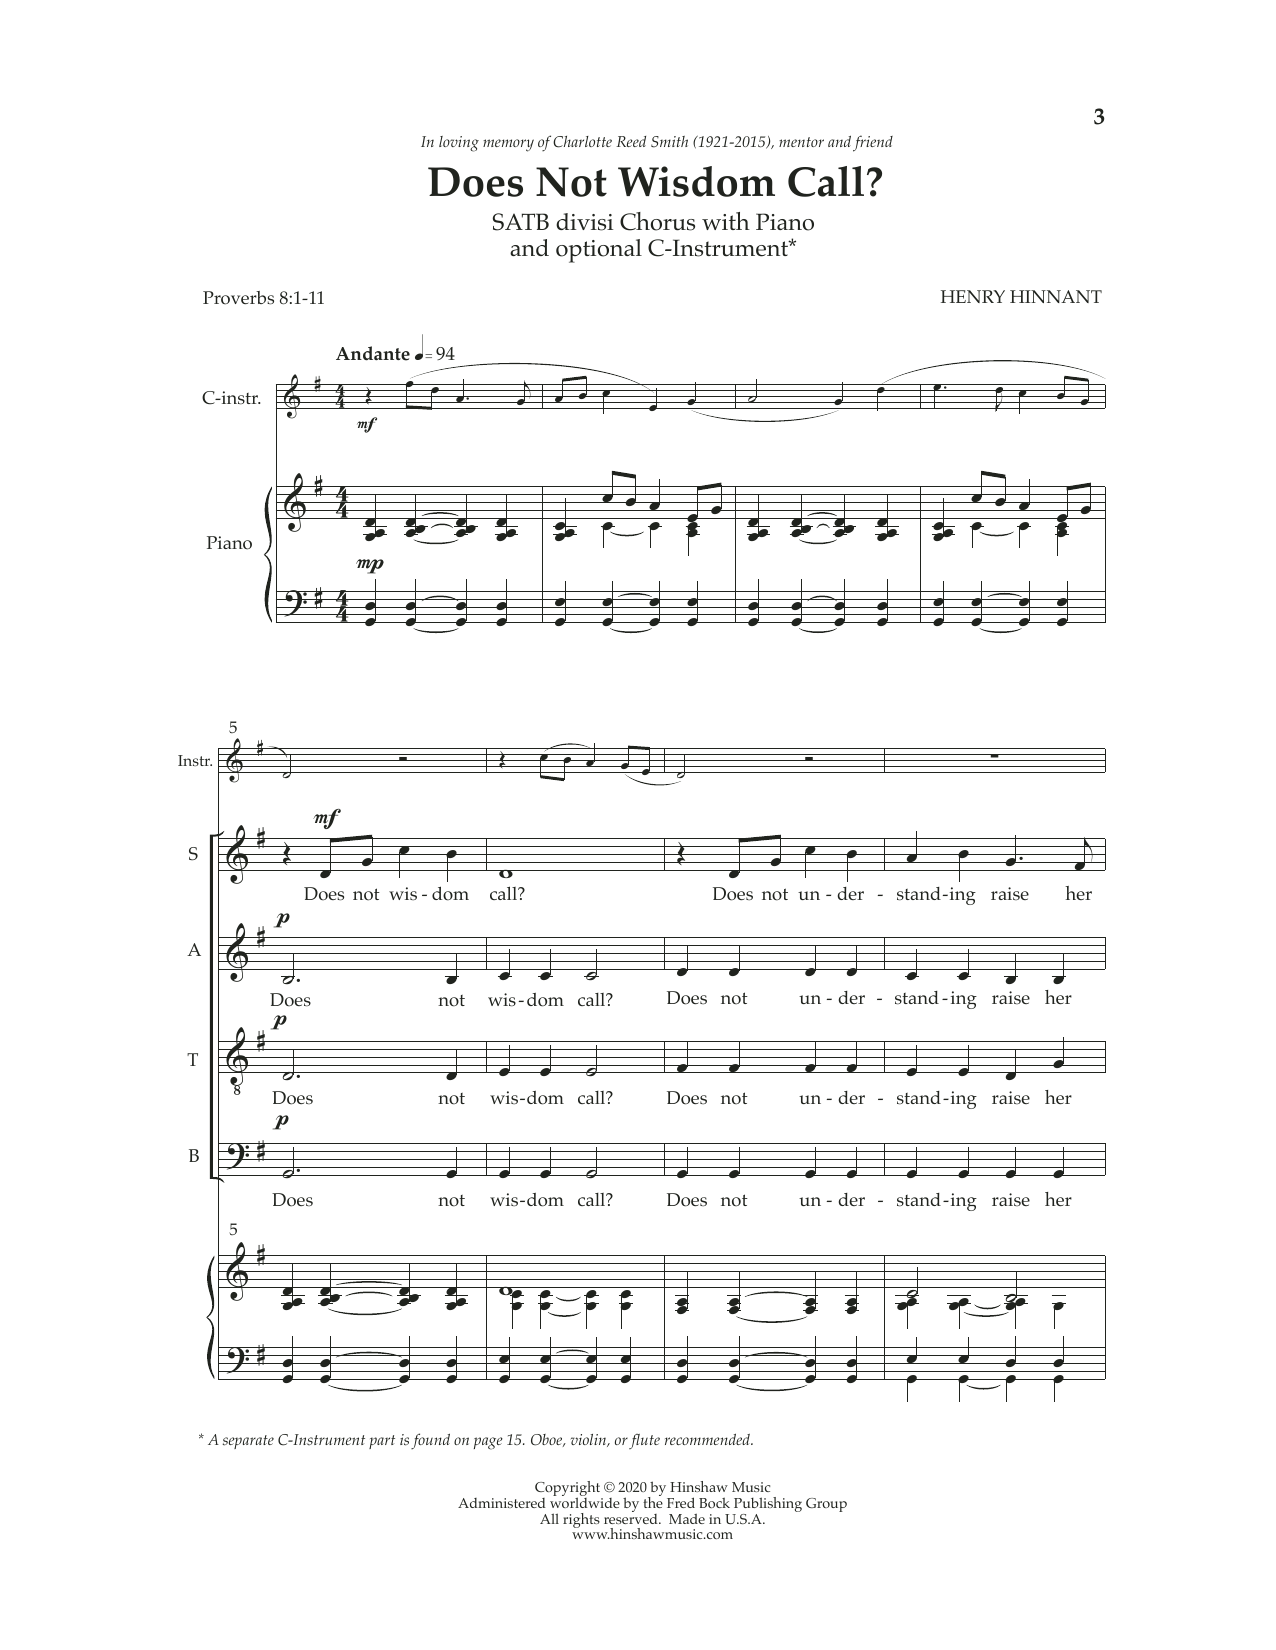 Hank Hinnant Does Not Wisdom Call? Sheet Music Notes & Chords for SATB Choir - Download or Print PDF